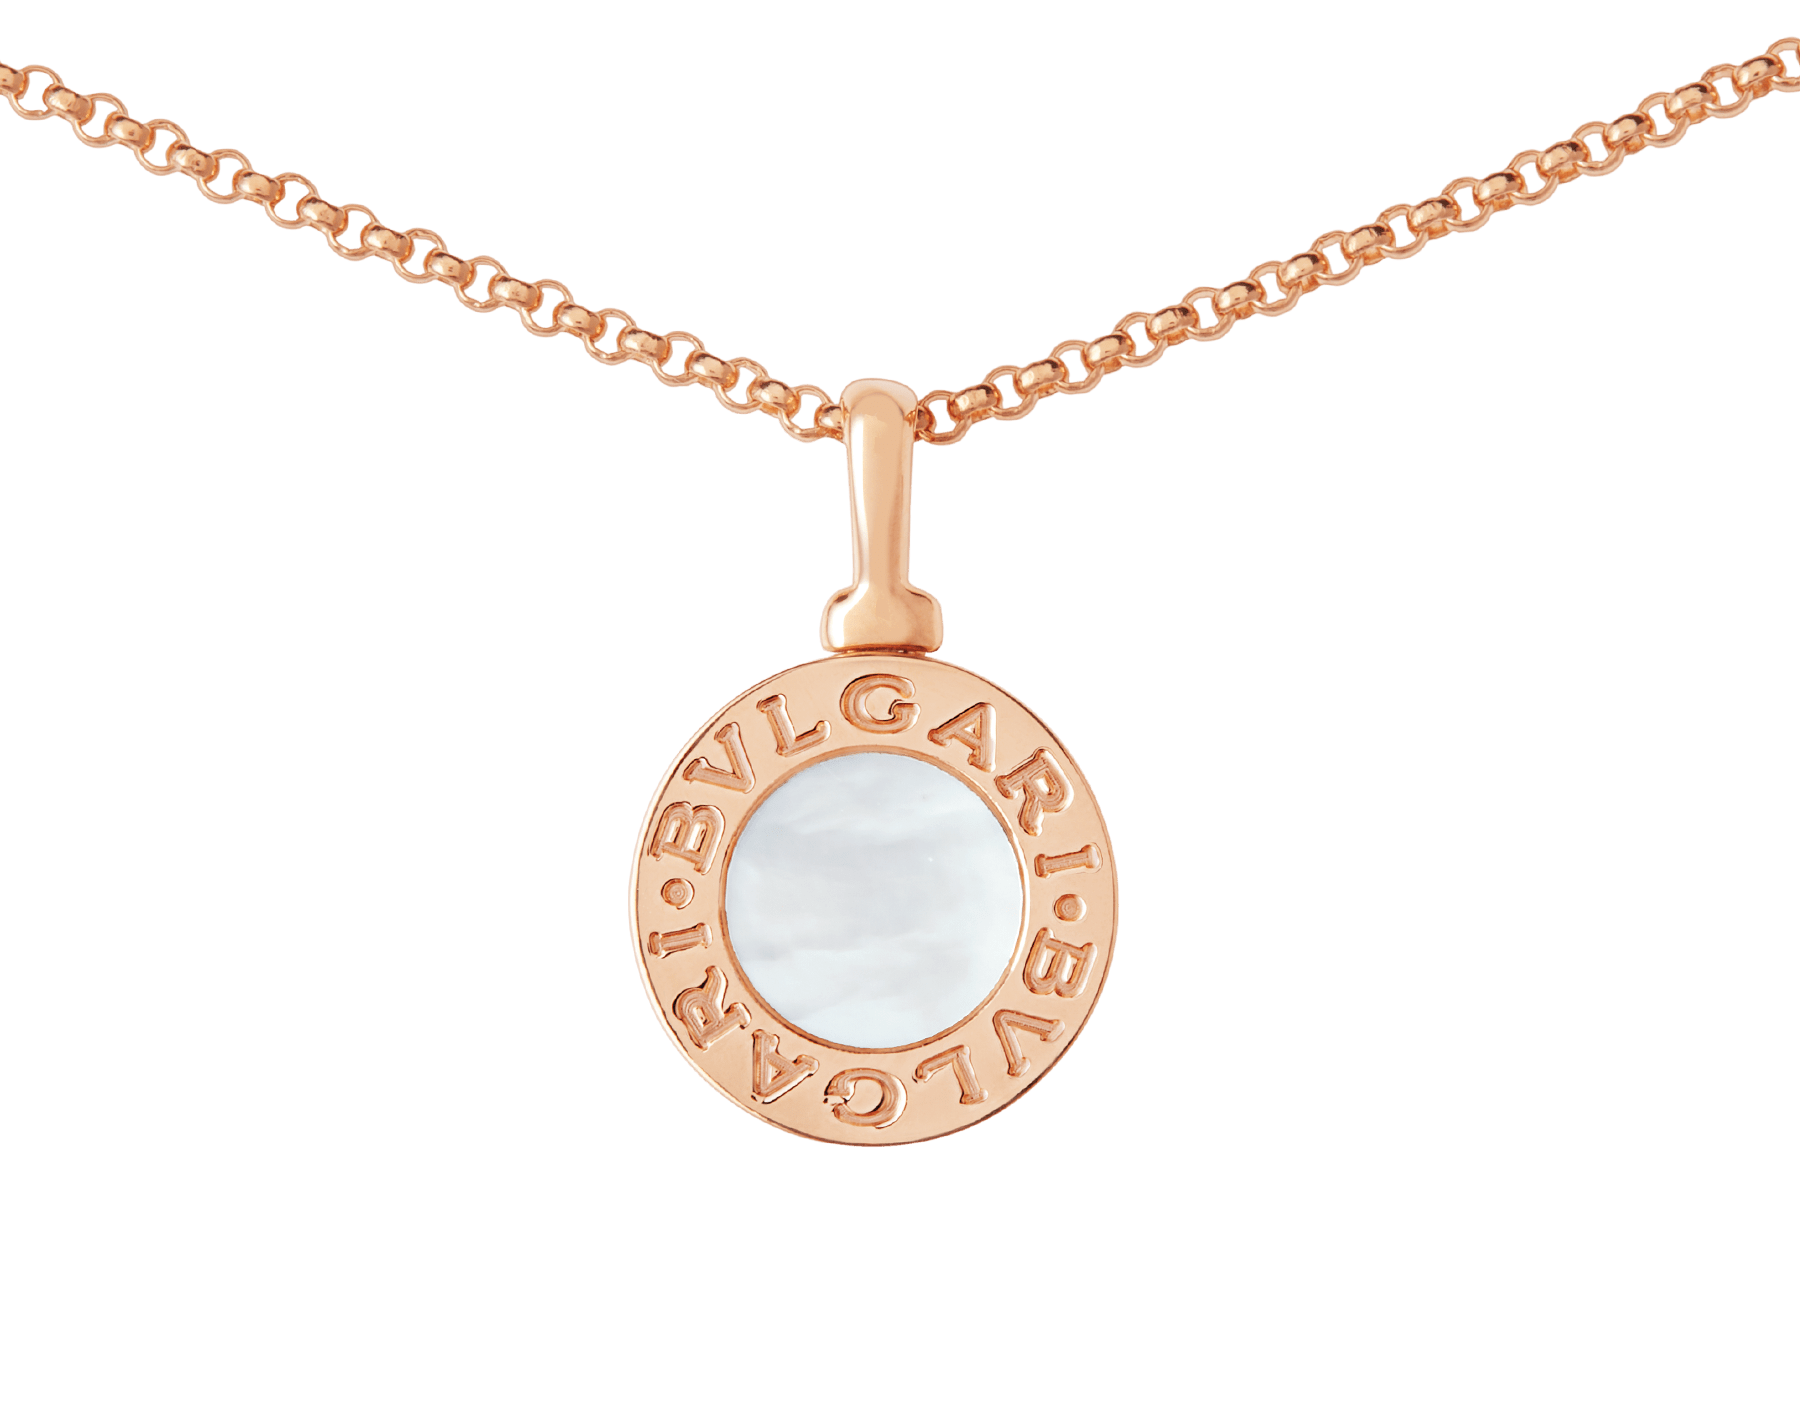 bvlgari pendant for sale